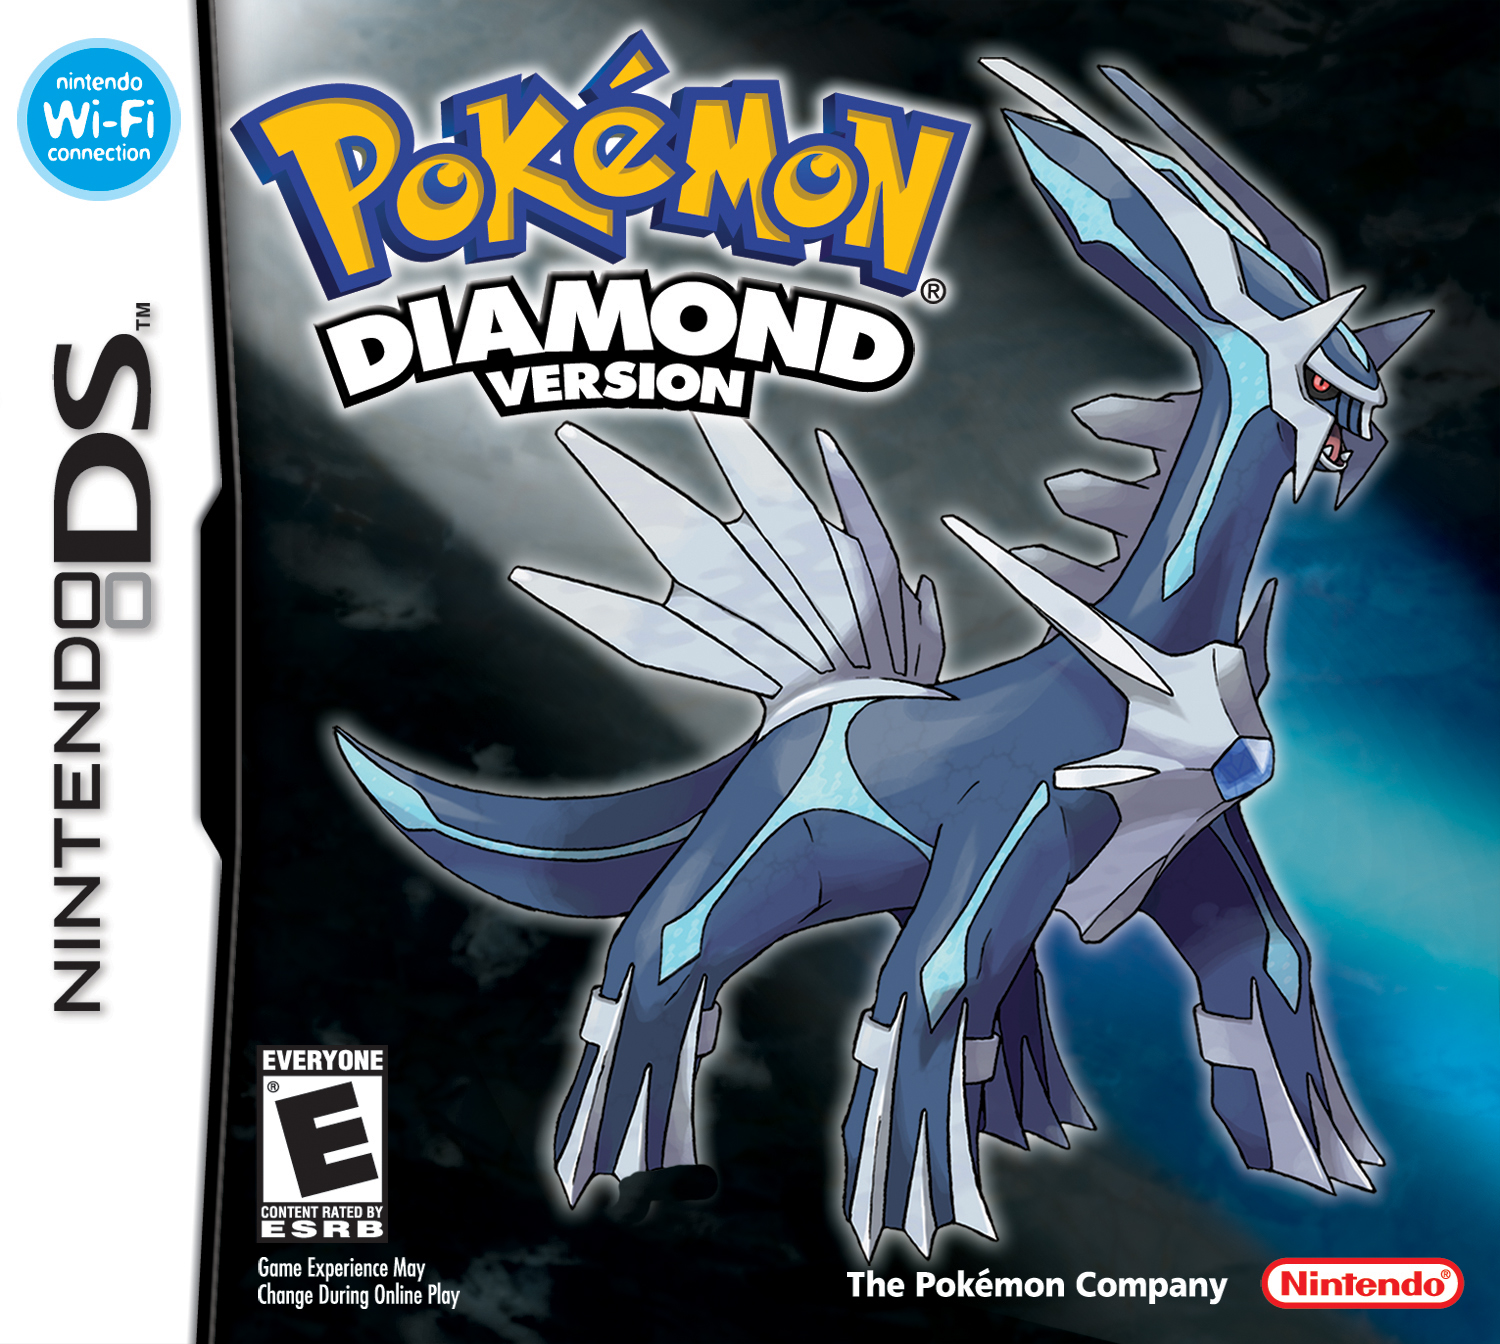 Pokémon Platinum - Wikipedia